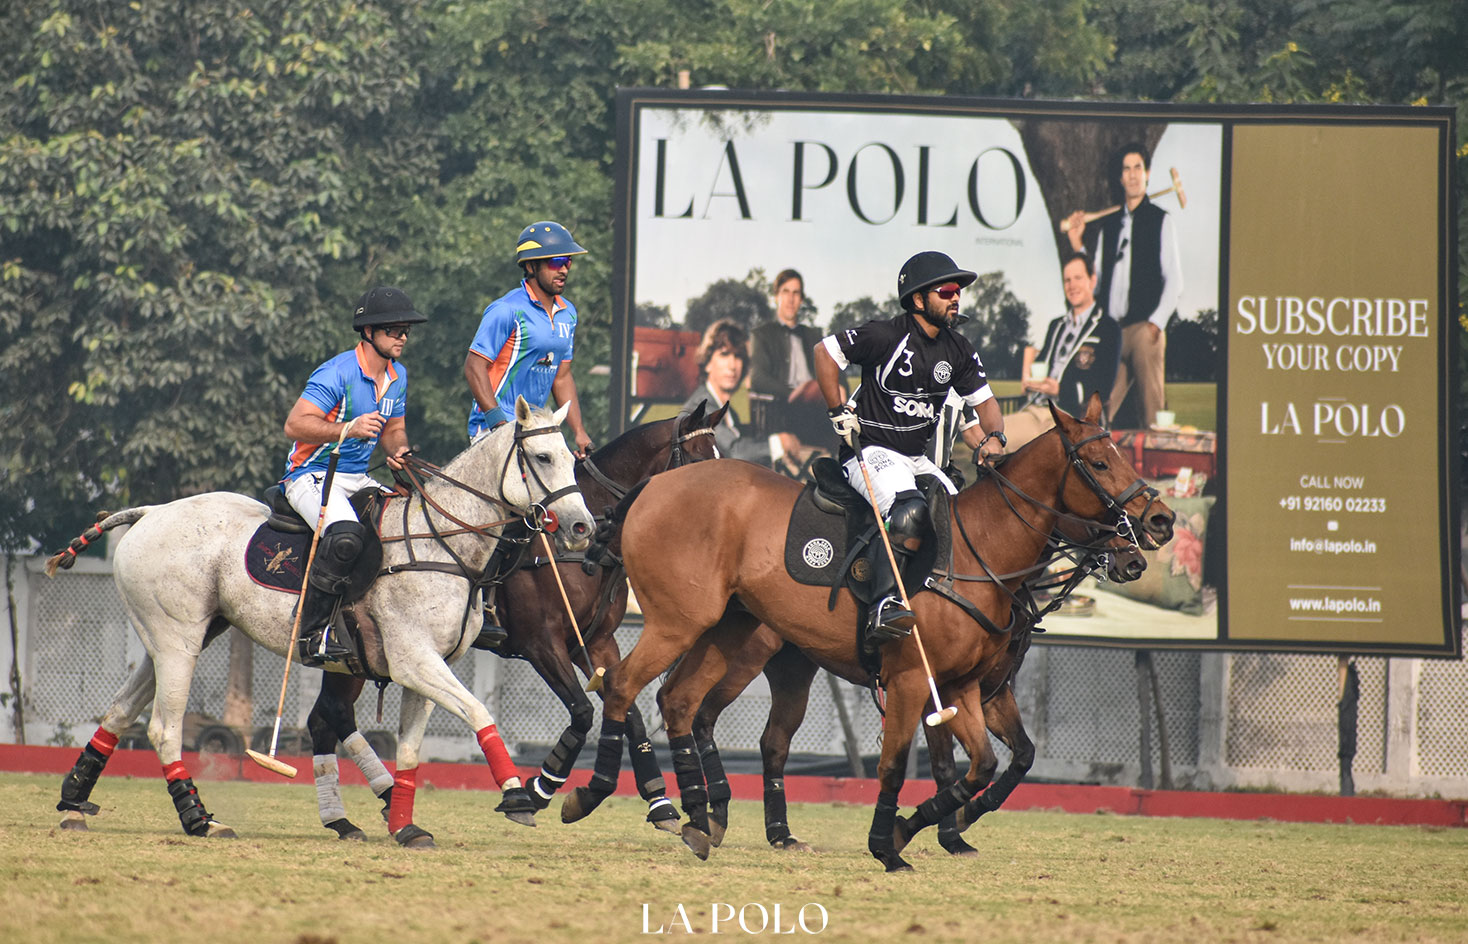 polo-shots-players-on-ground-horses-polo-ponies-delhi-season-lapolo